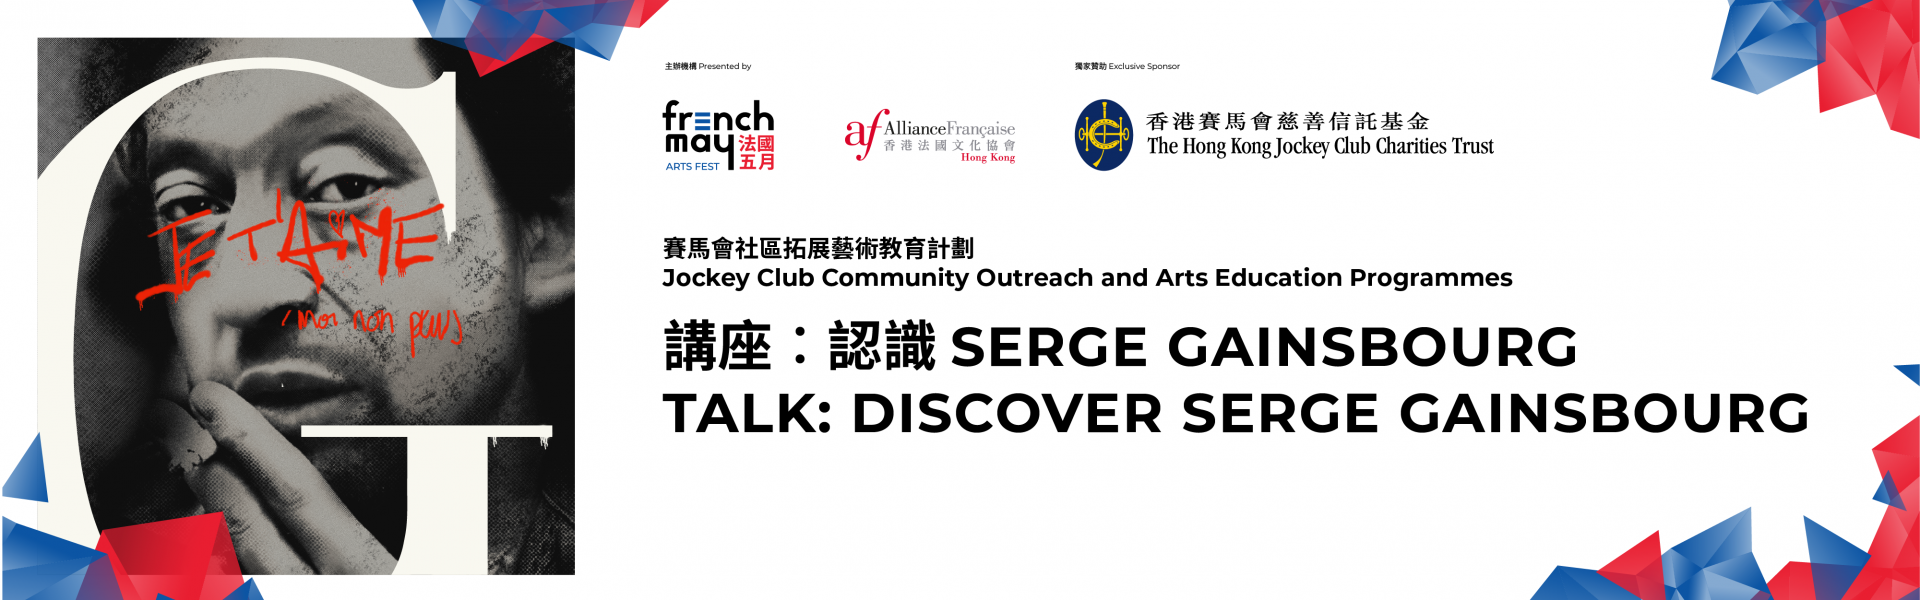 Talk: Discover Serge Gainsbourg